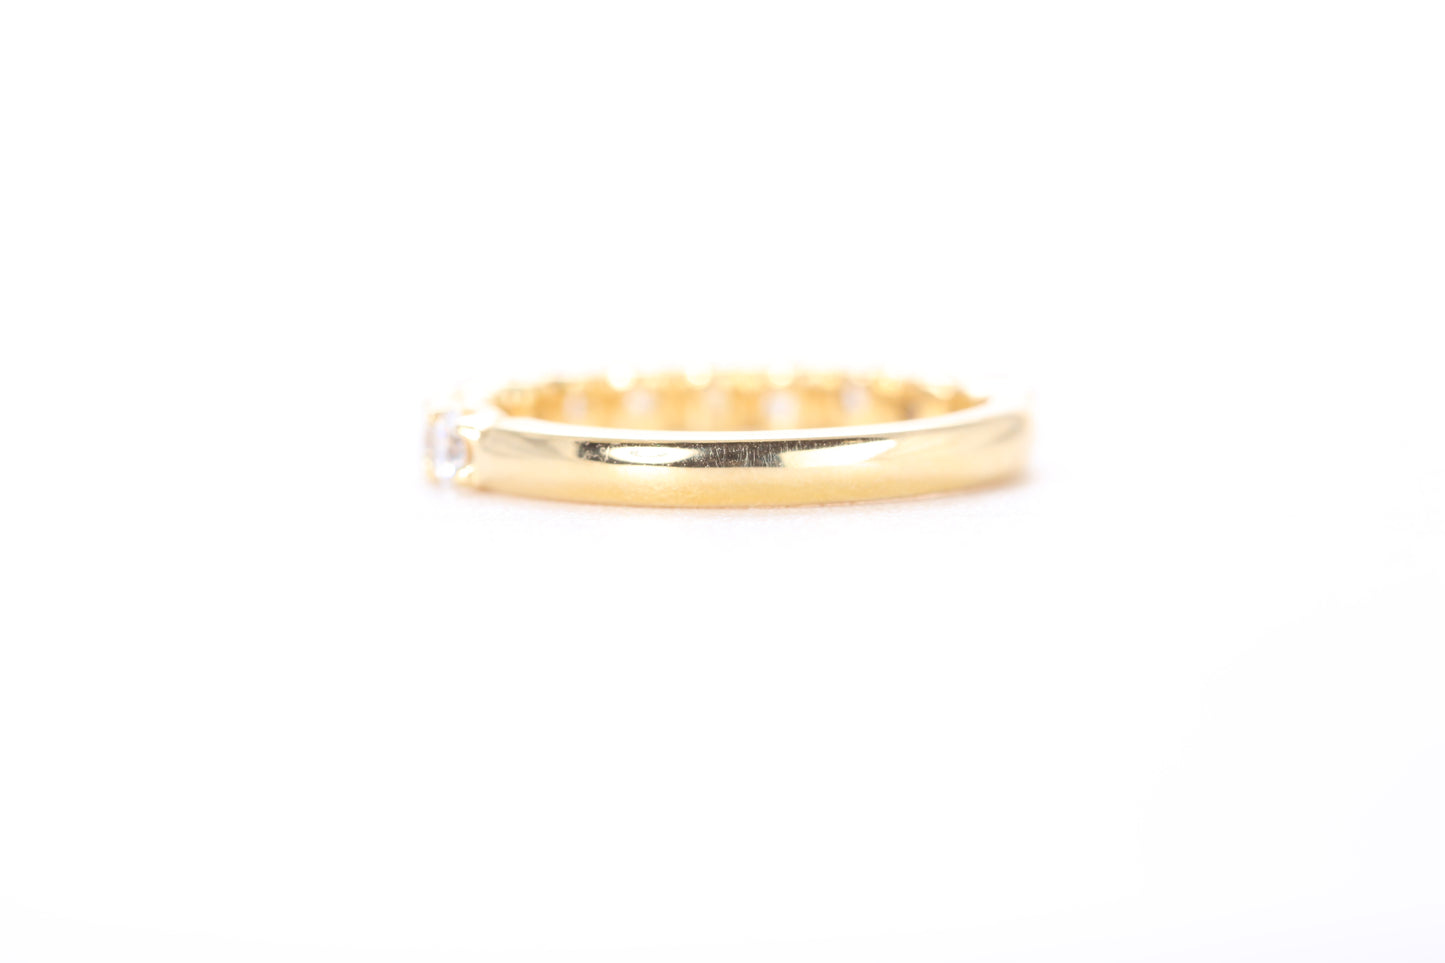 Micro Pavé One Carat Carat Diamond Ring in 18k Yellow Gold